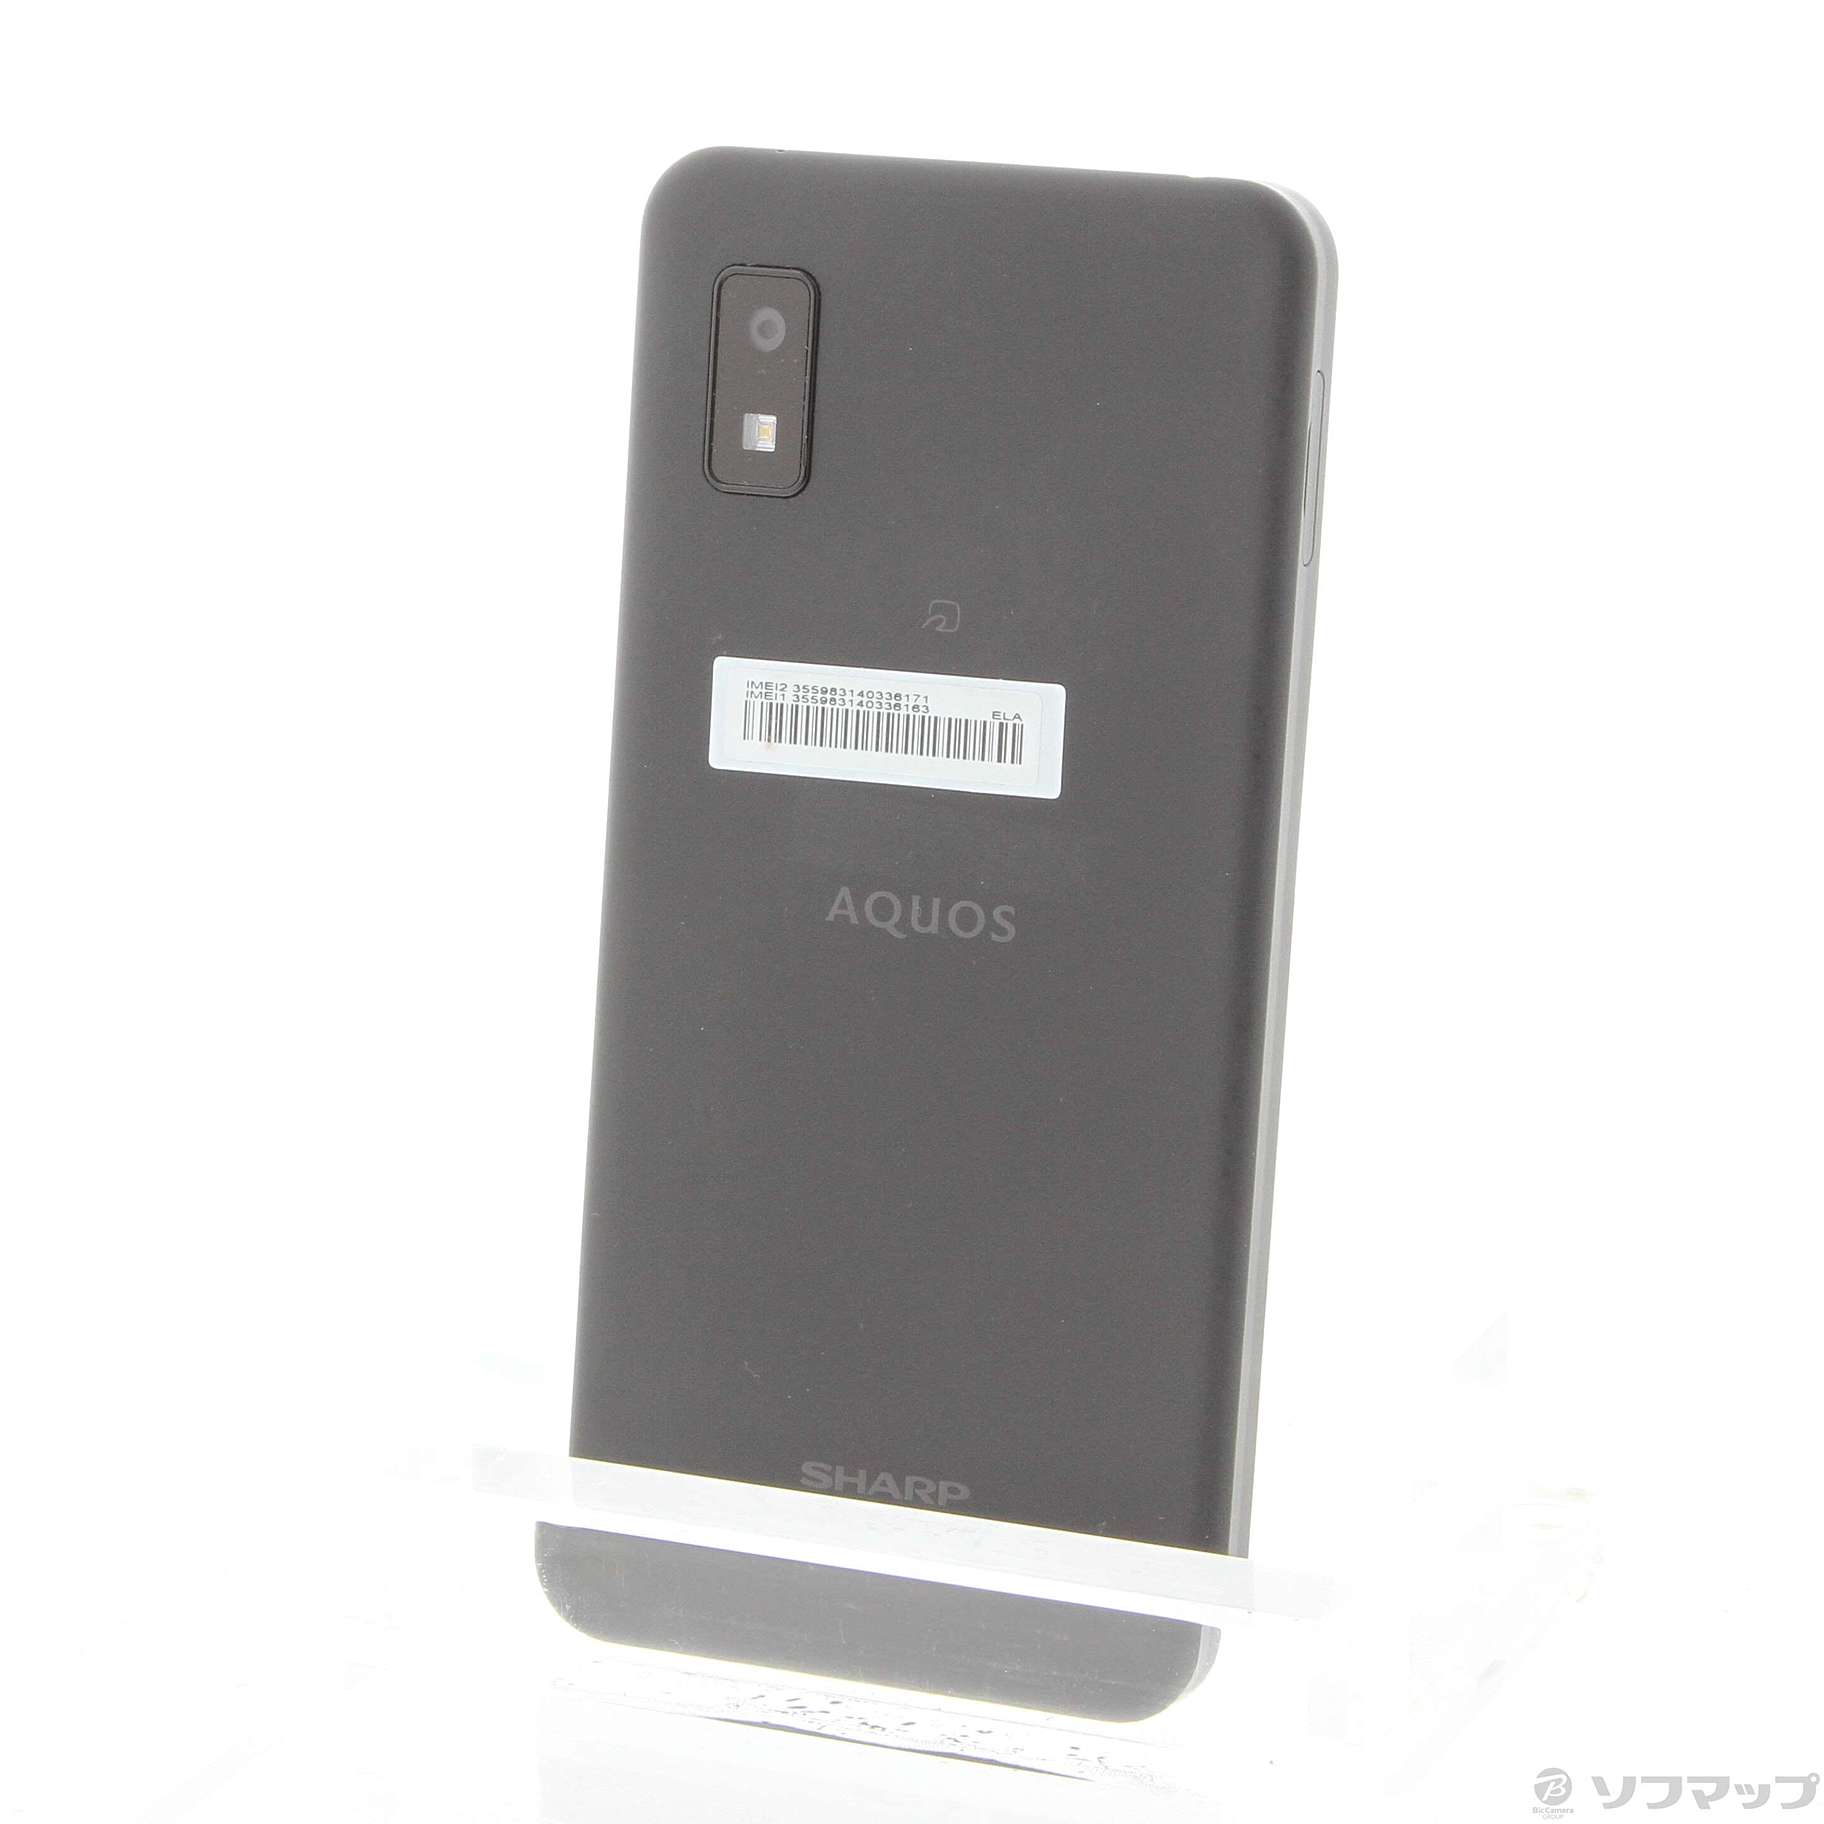 AQUOS wish 楽天版 64GB チャコール SH-M20 SIMフリー